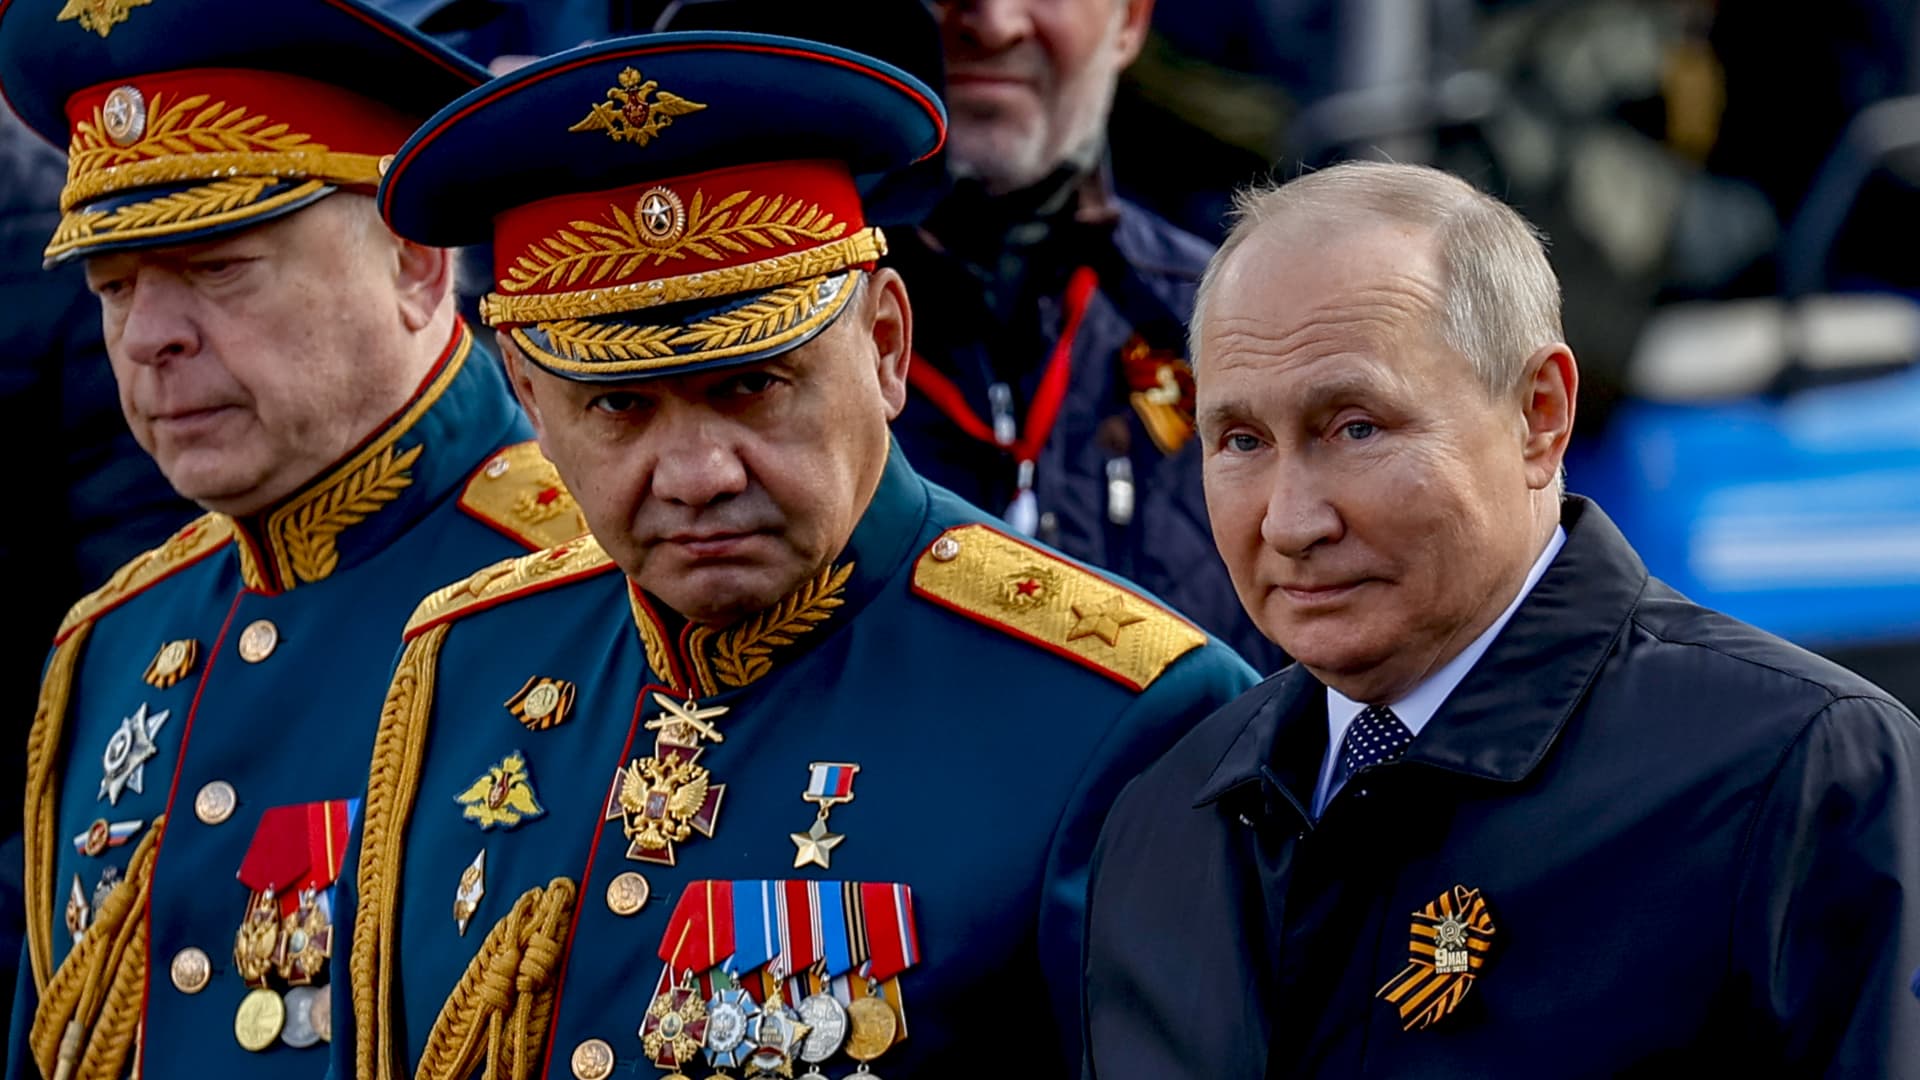 Europe lambasted for failing to discourage Putin’s warfare